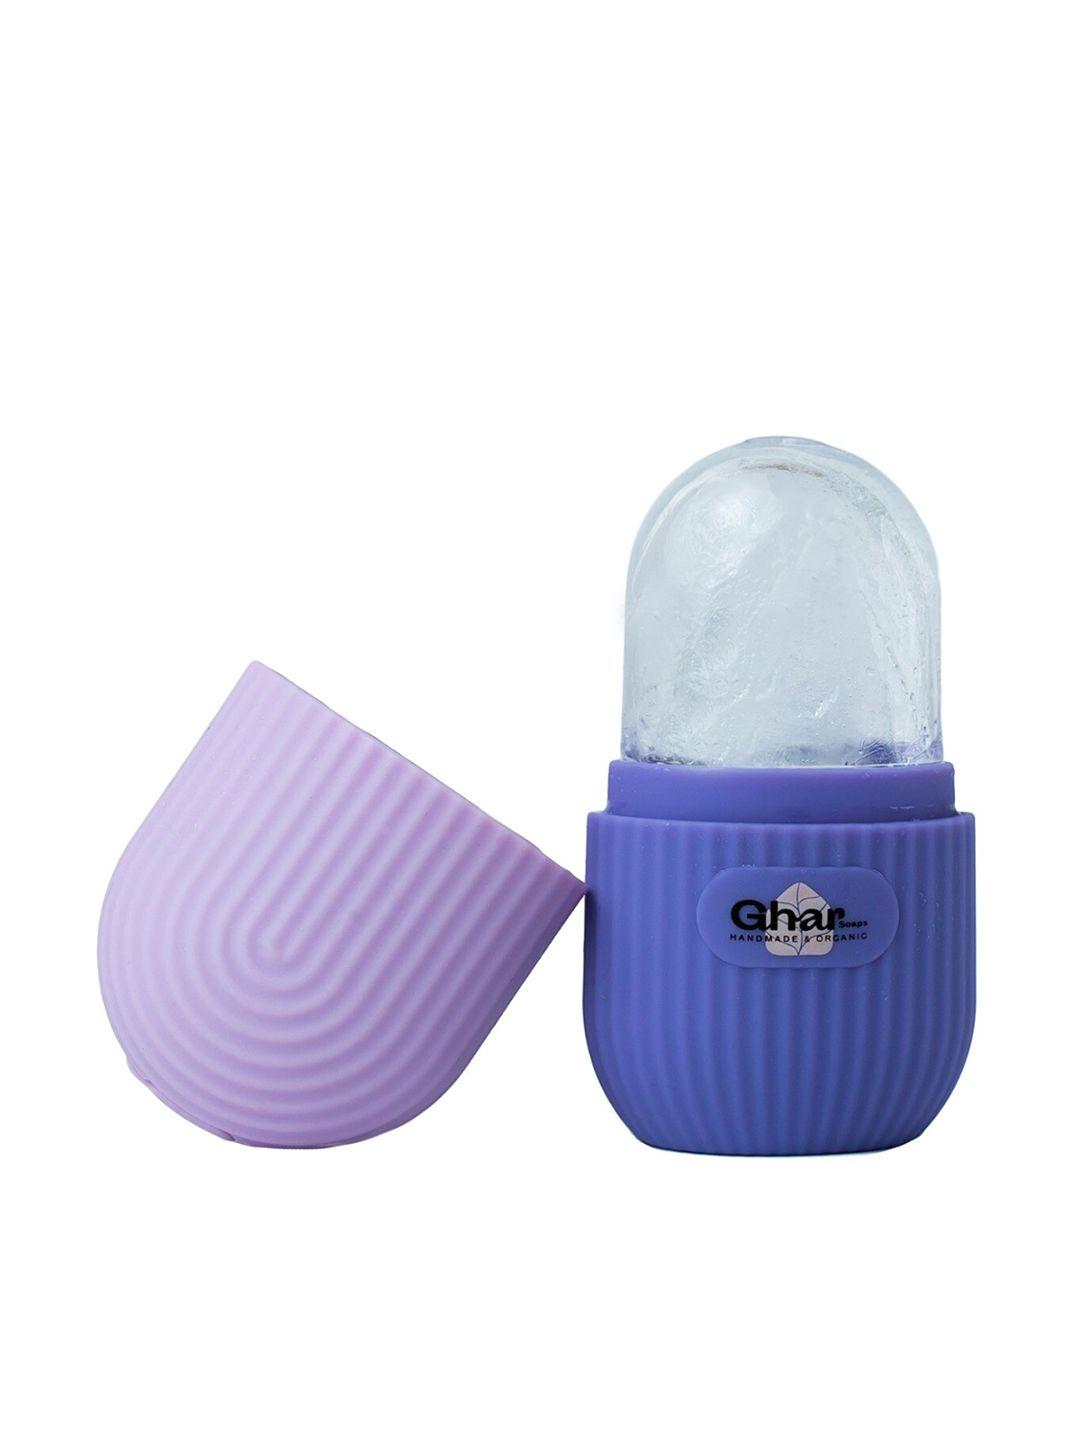 ghar soaps face & eyes reusable ice roller - purple